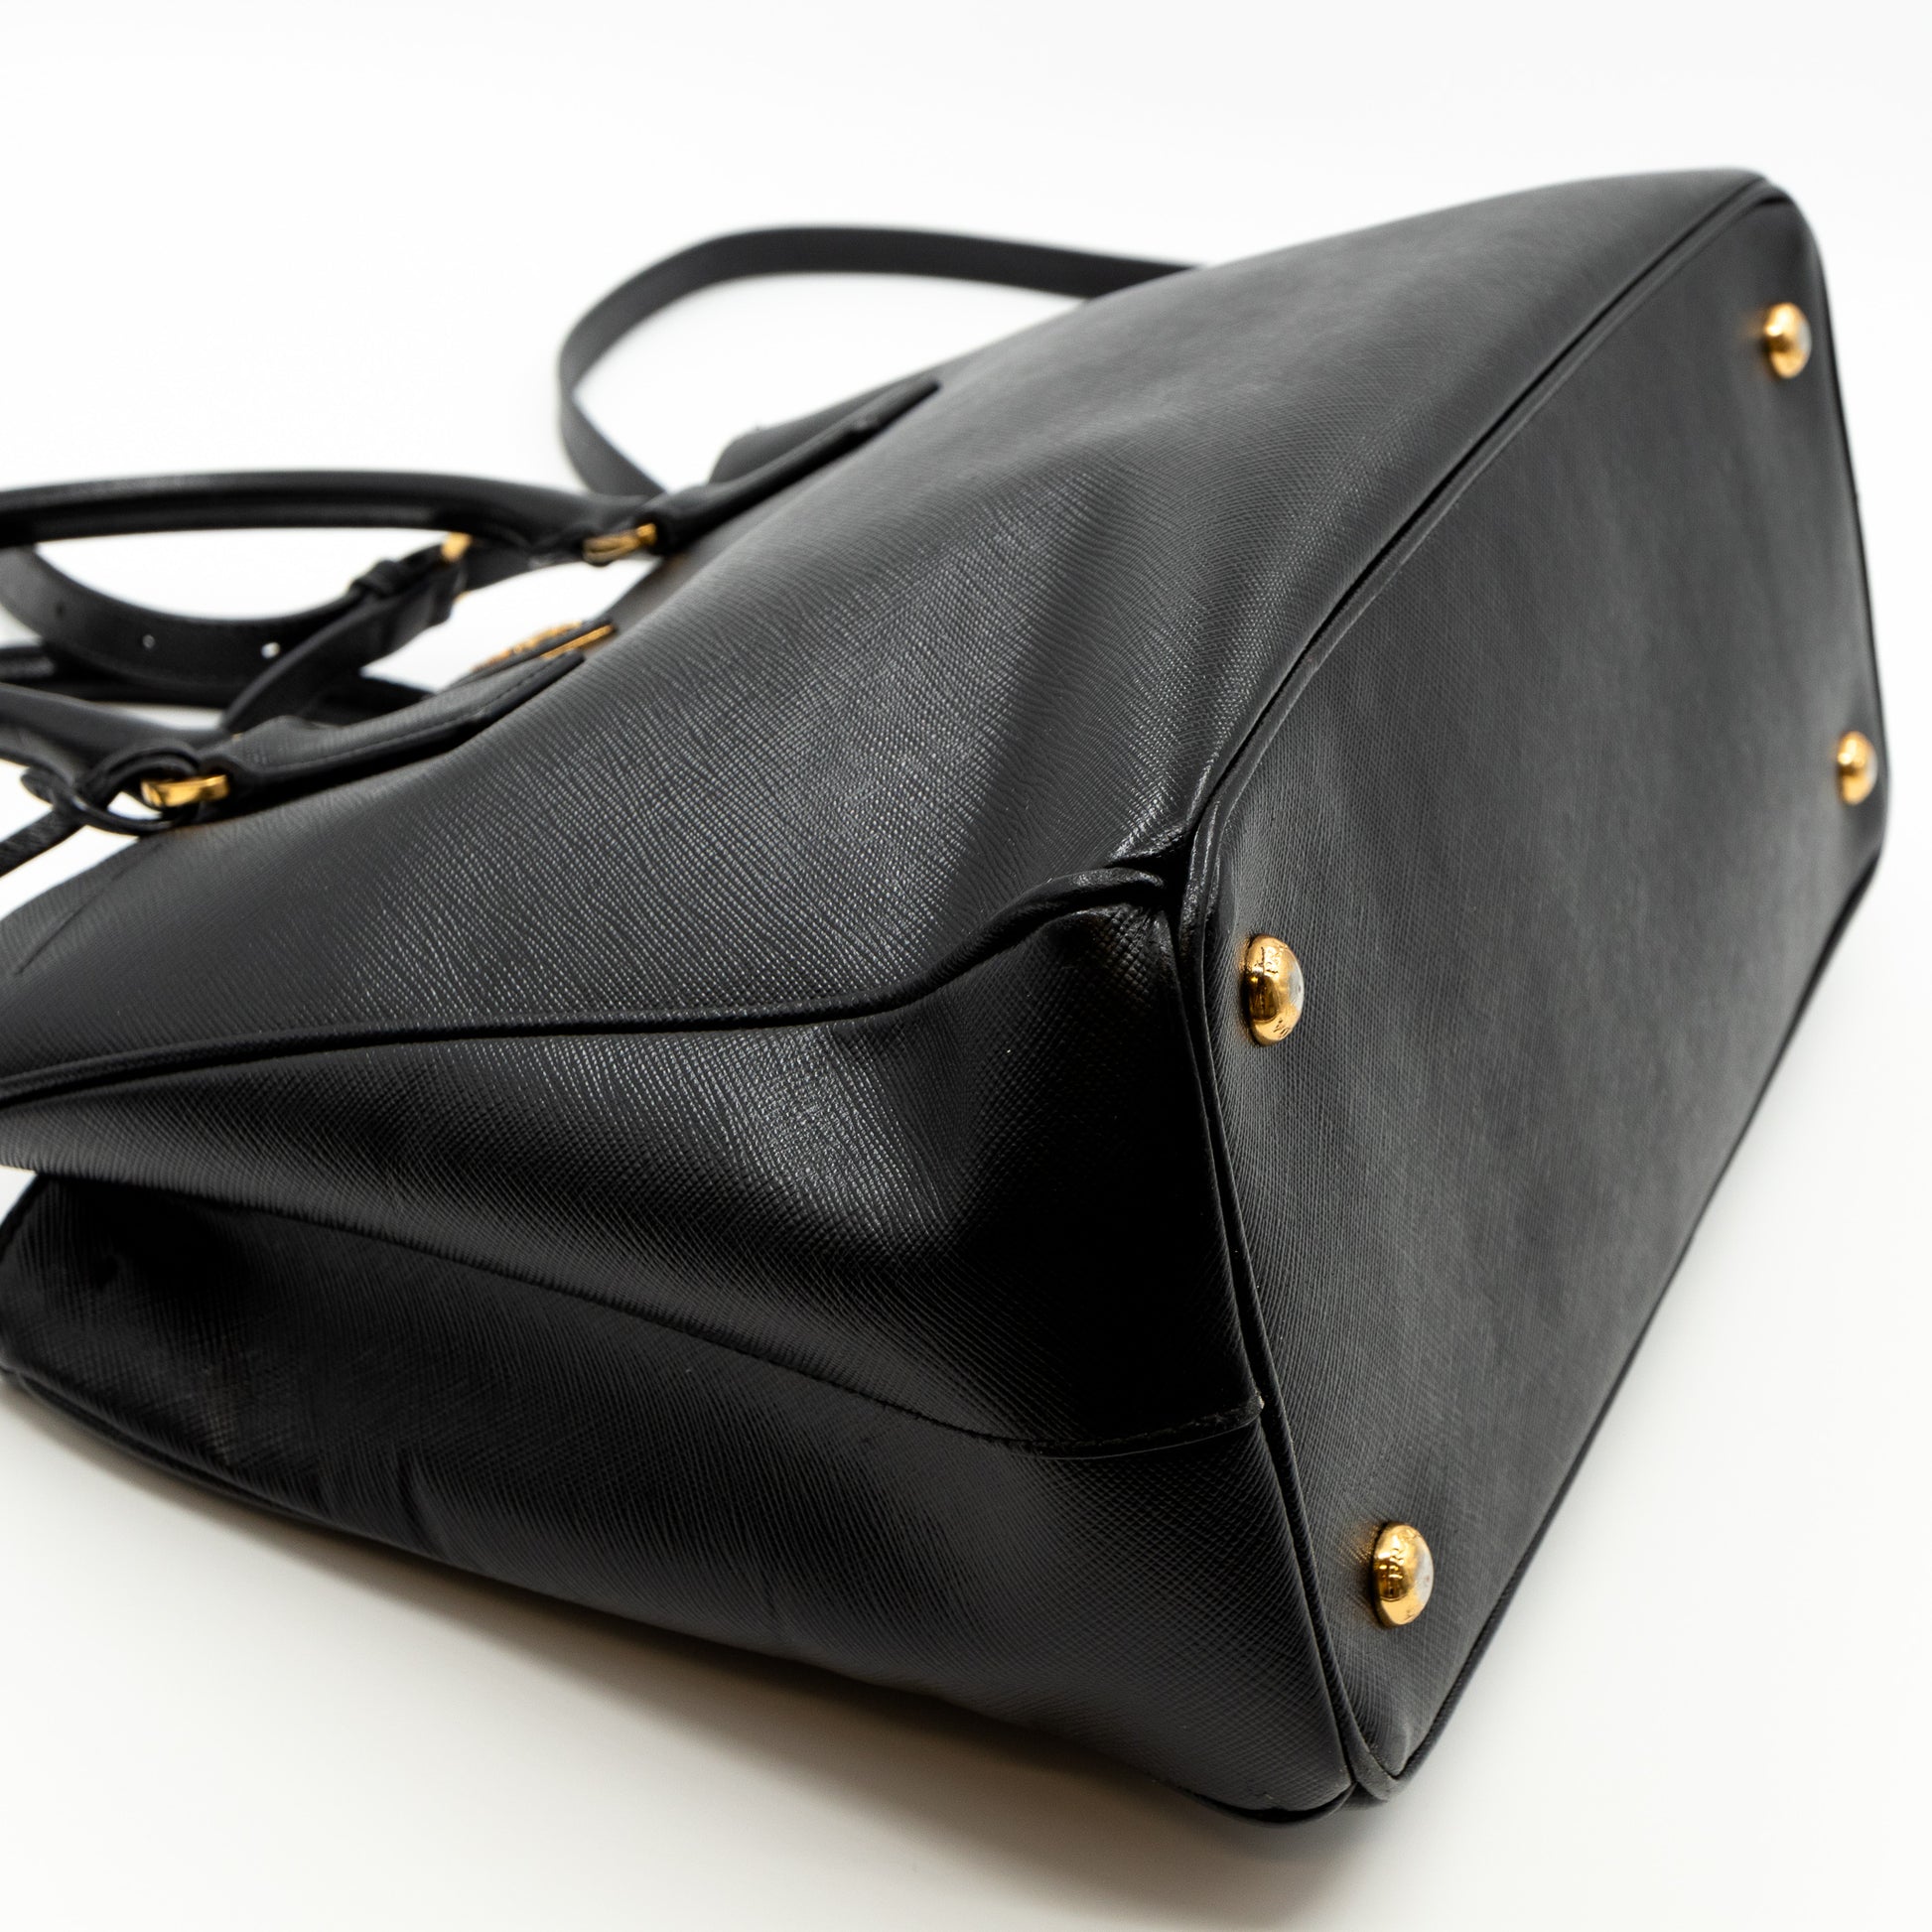 Galleria leather travel bag Prada Black in Leather - 27478116